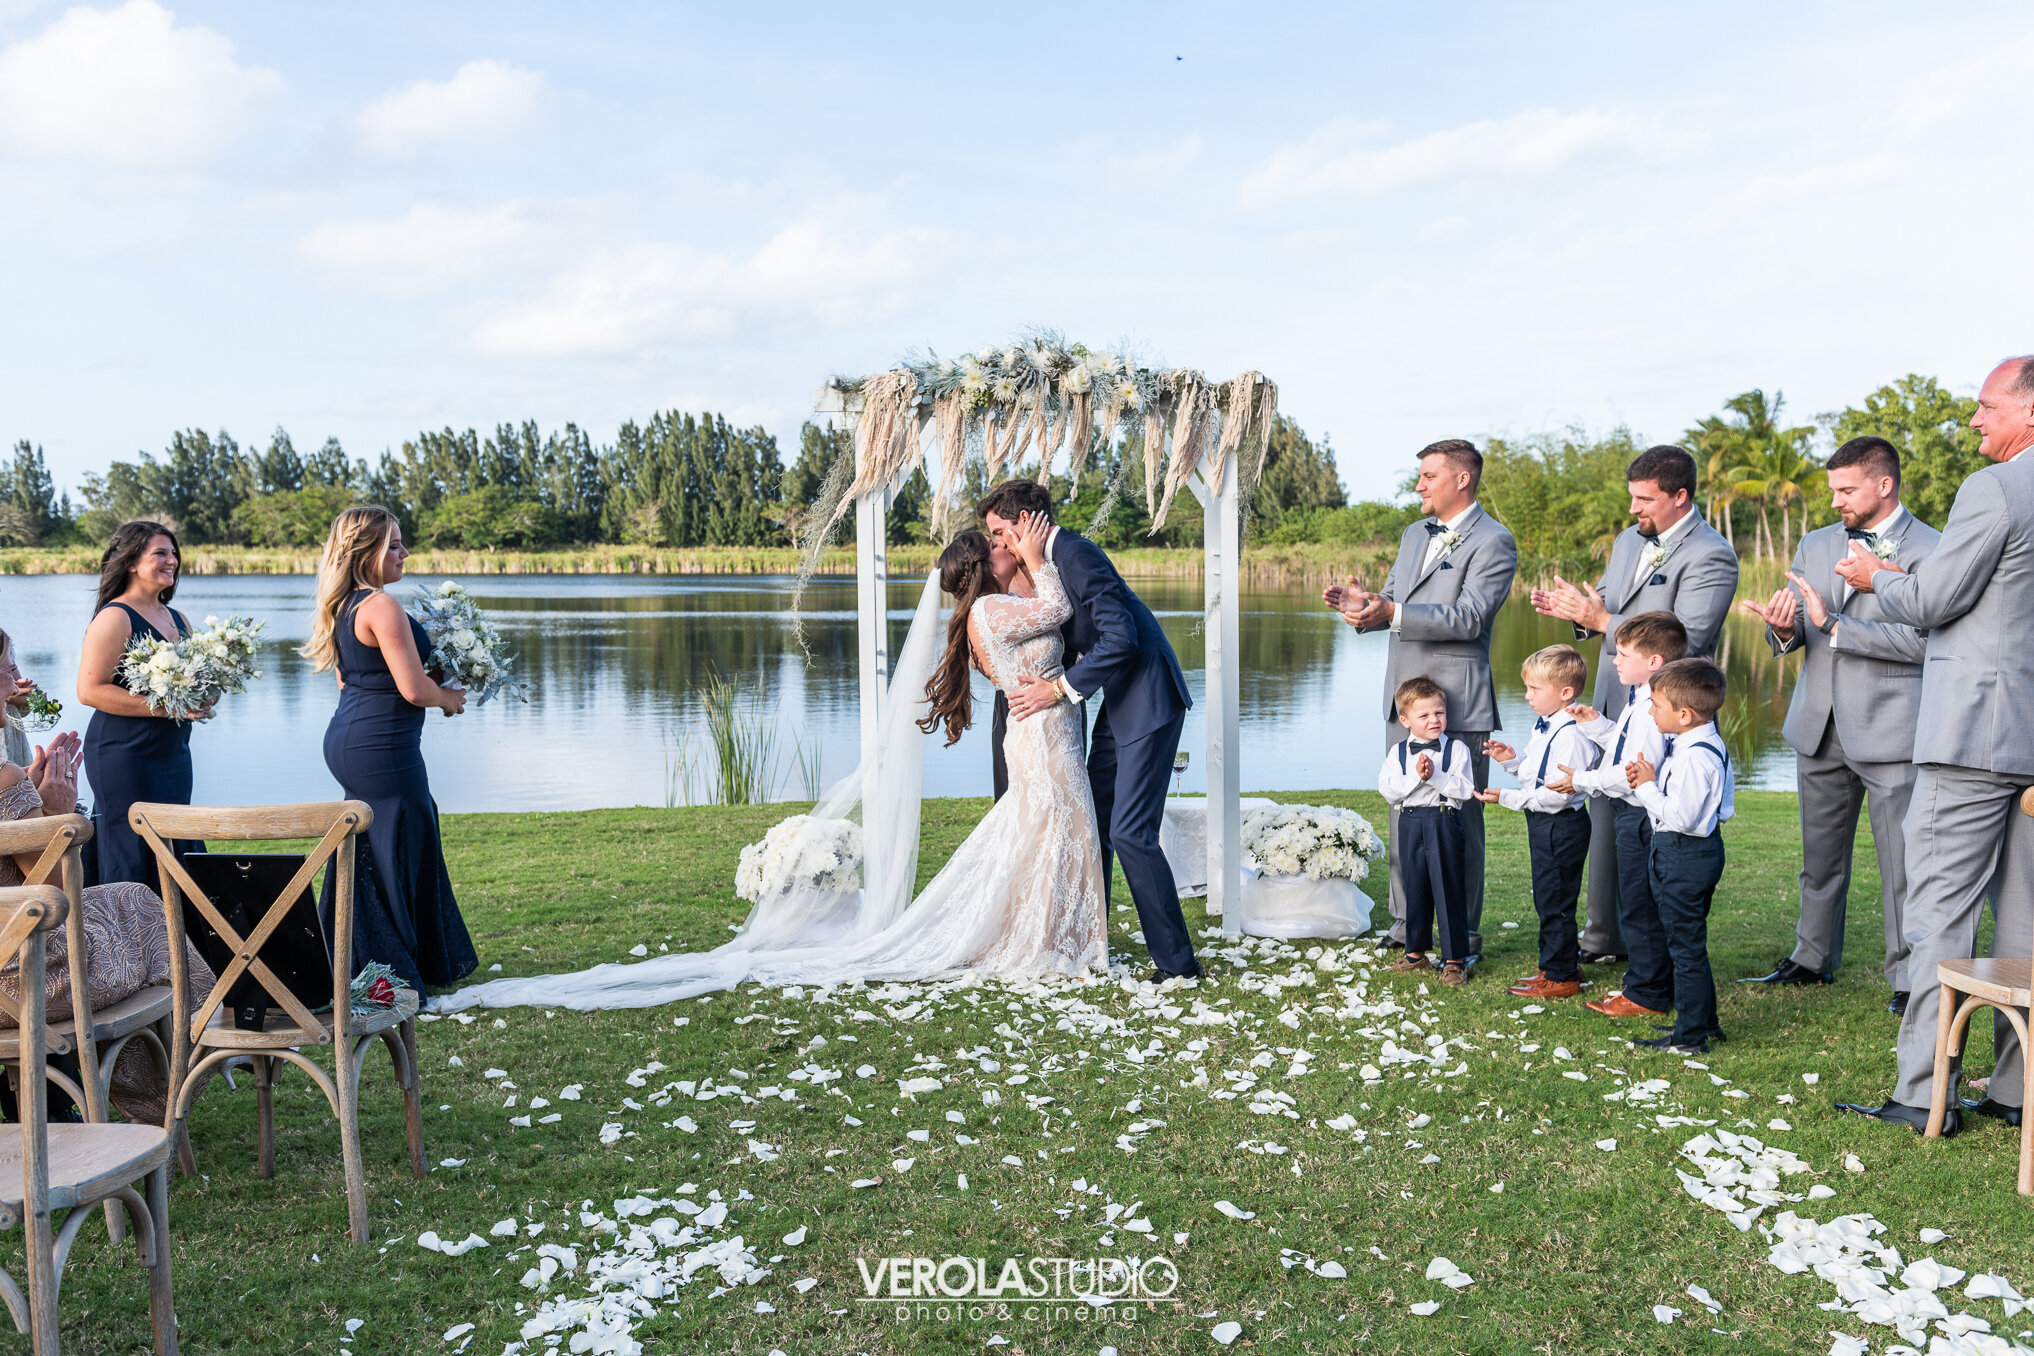 Verola Studio Lake House wedding-11.jpg